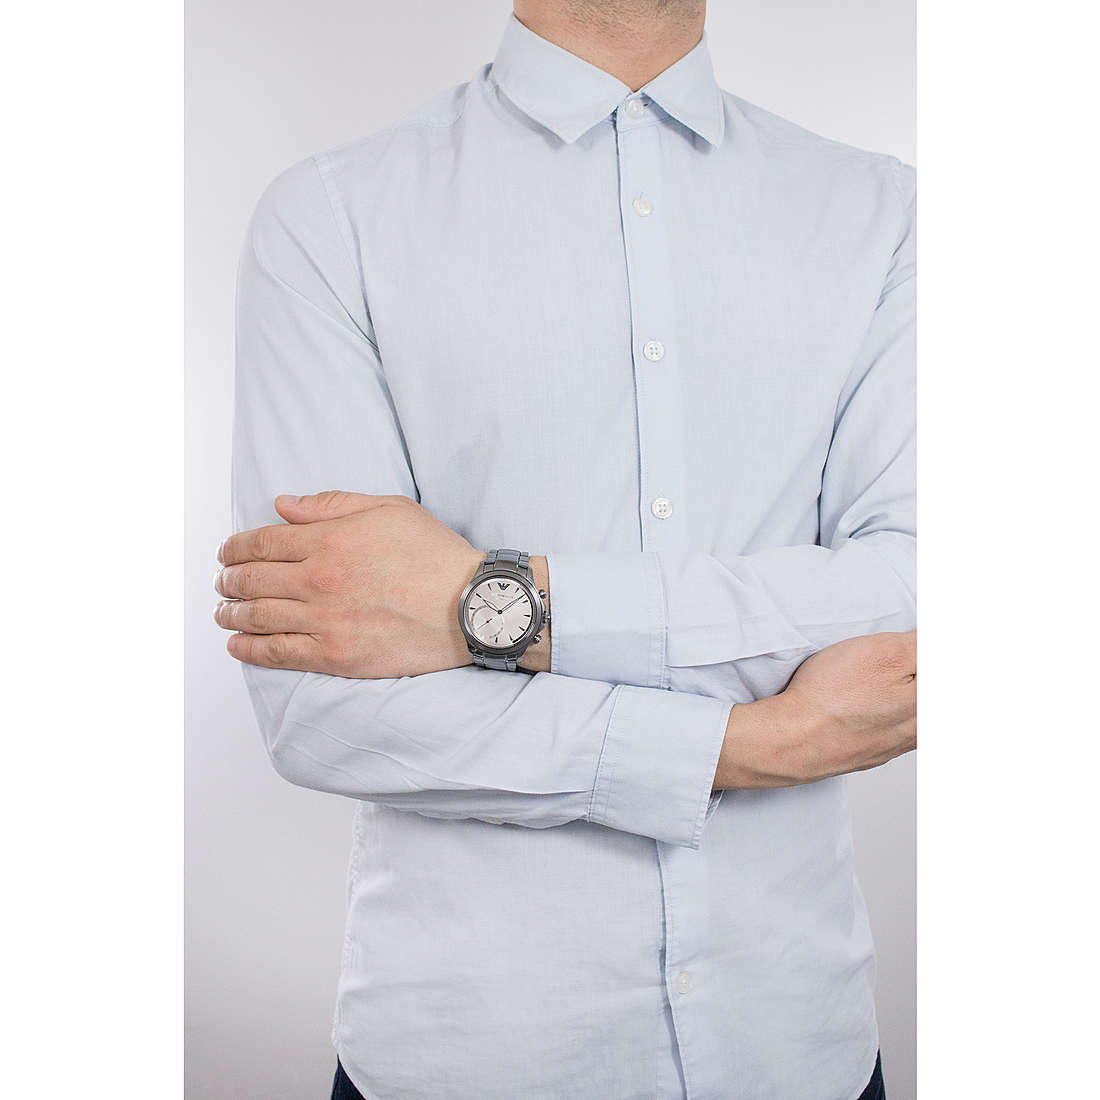 Emporio Armani Smartwatches man ART3017 wearing